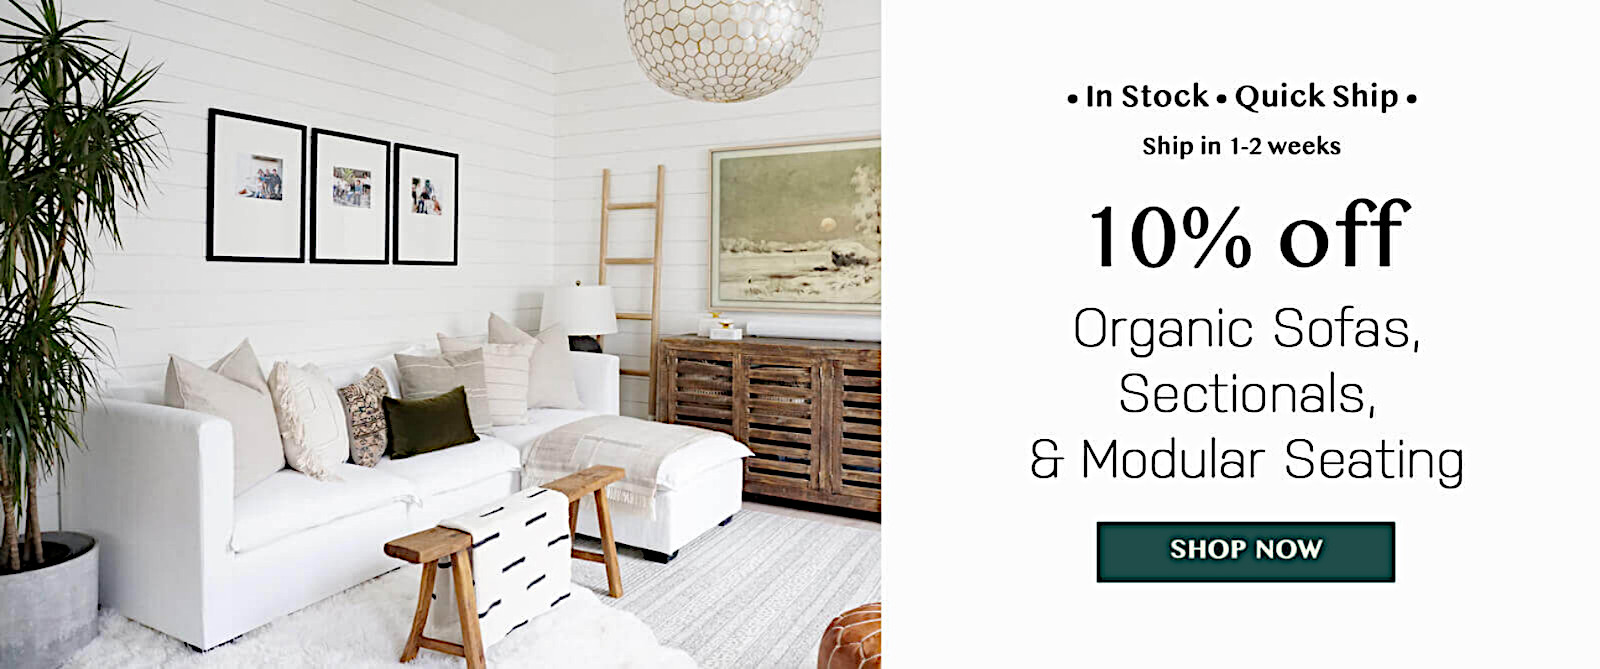 organic sofas sectionals modular seating economical price